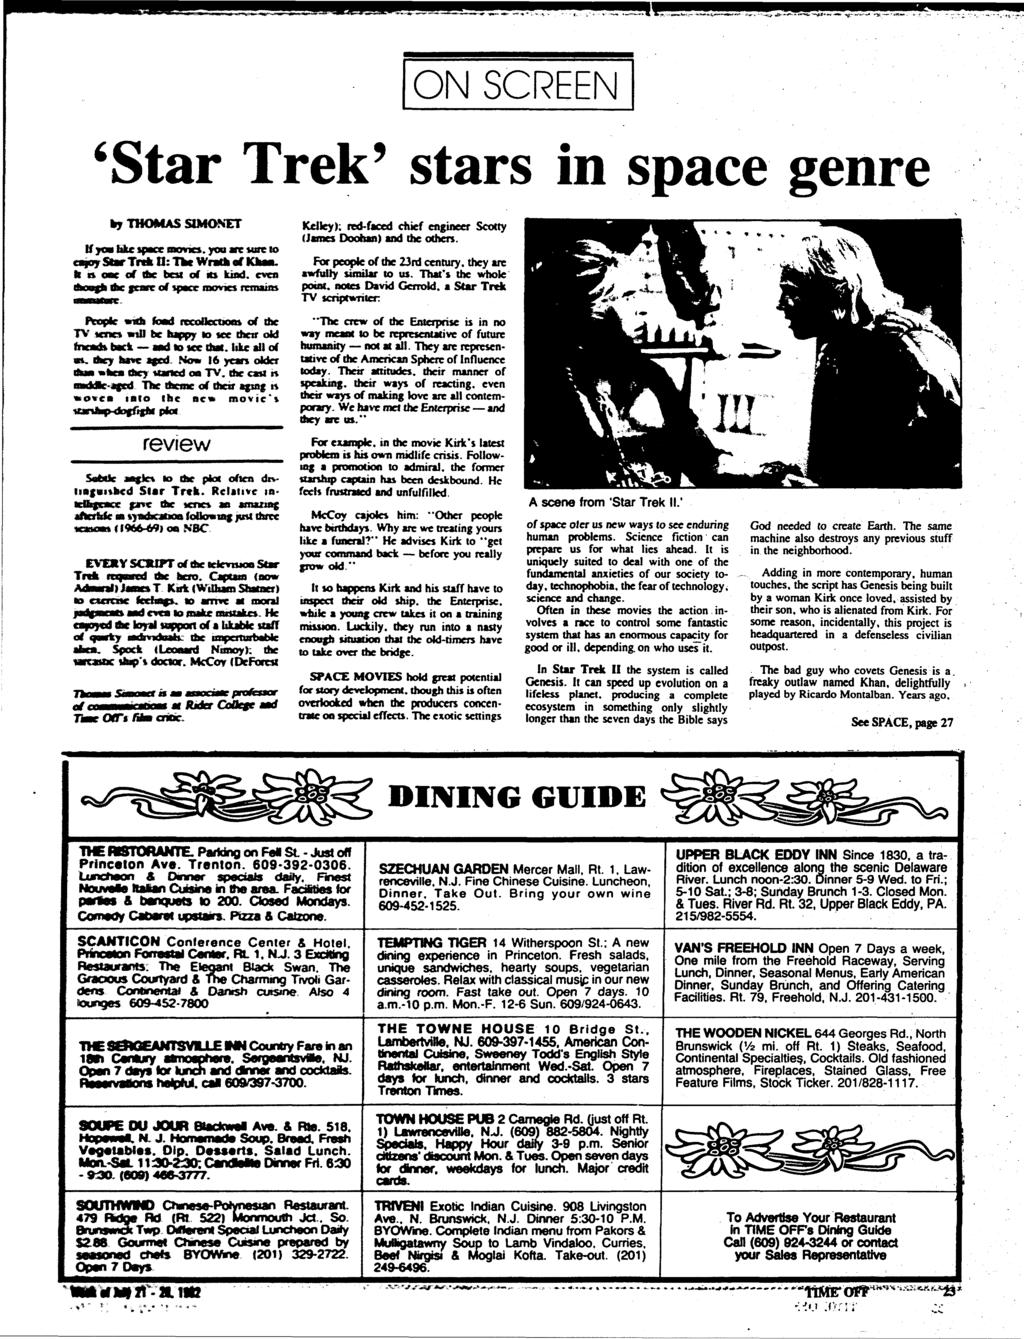 ON SCREEN 'Star Trek' stars in space genre by THOMAS SLMOSET tf yoa hkc space memo, you me tore «o oy Star Tnli O: Ike Wratk of KkM.